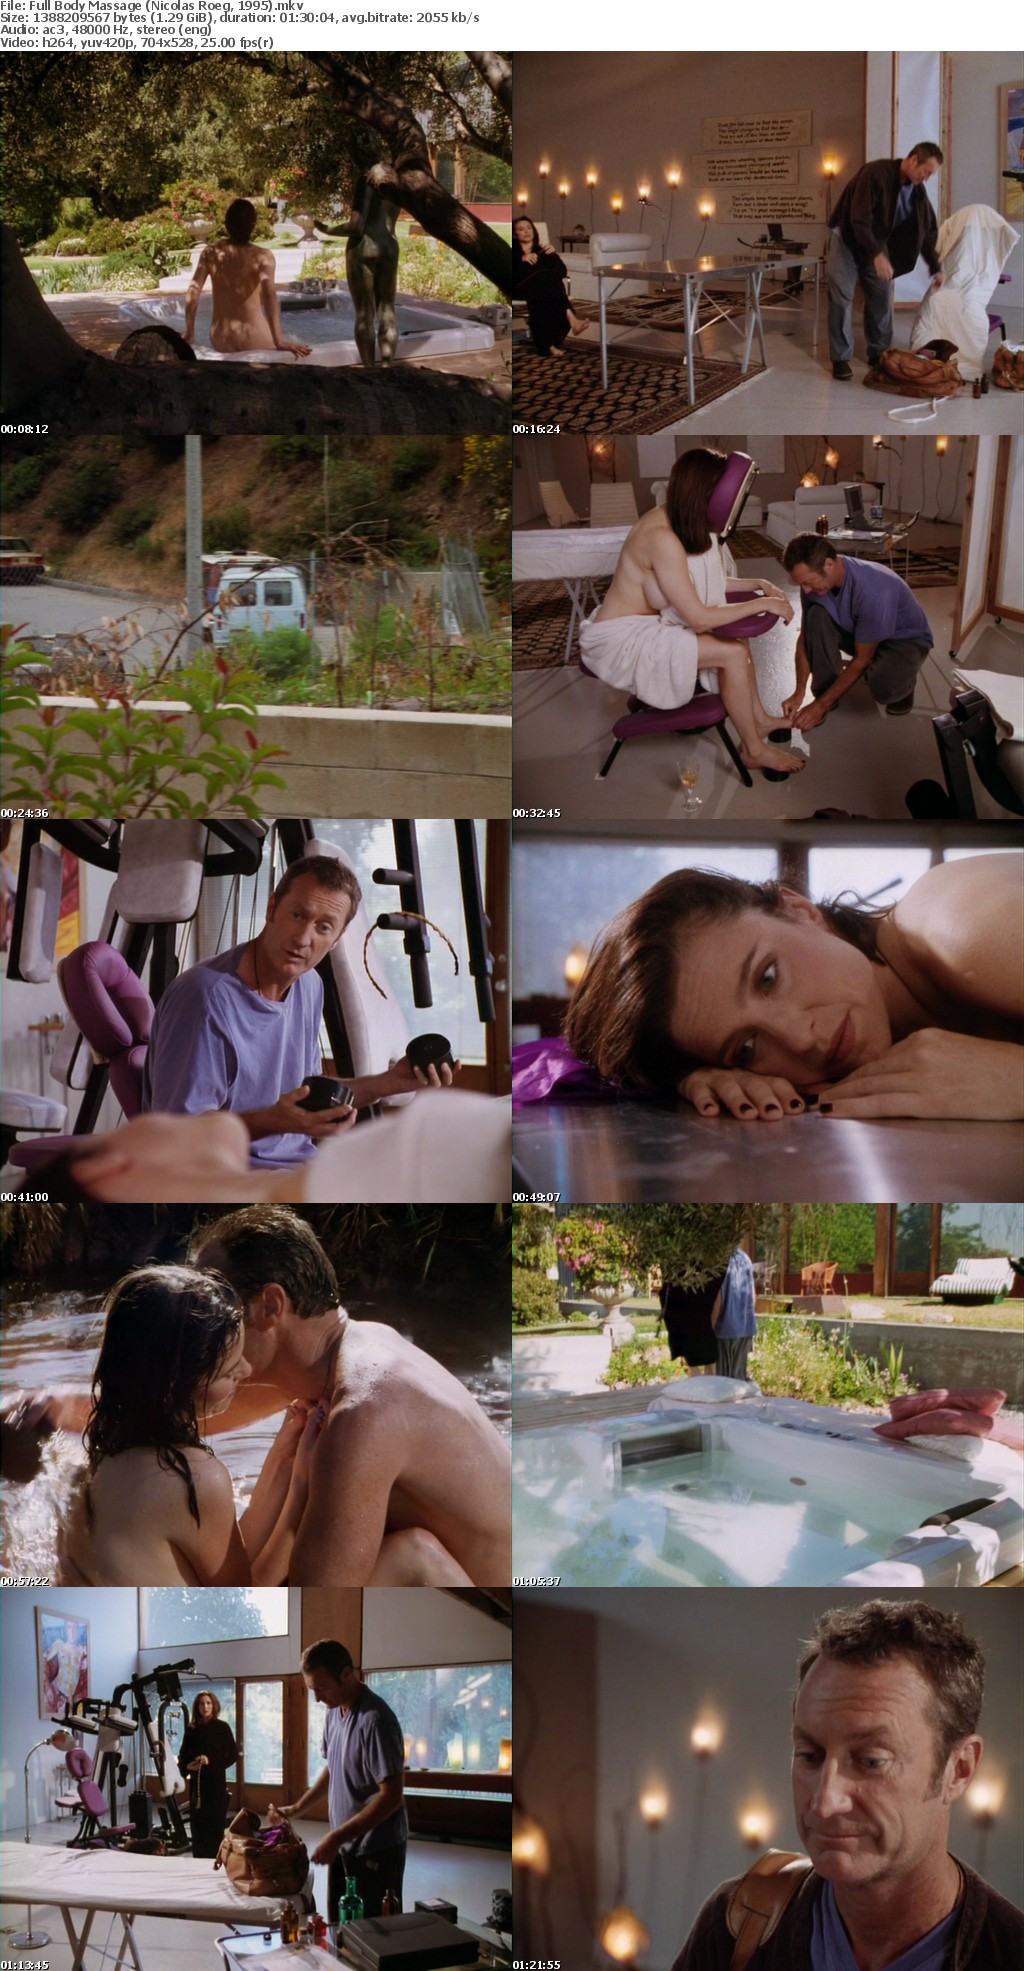 Full Body Massage 1995 - USA erotic drama